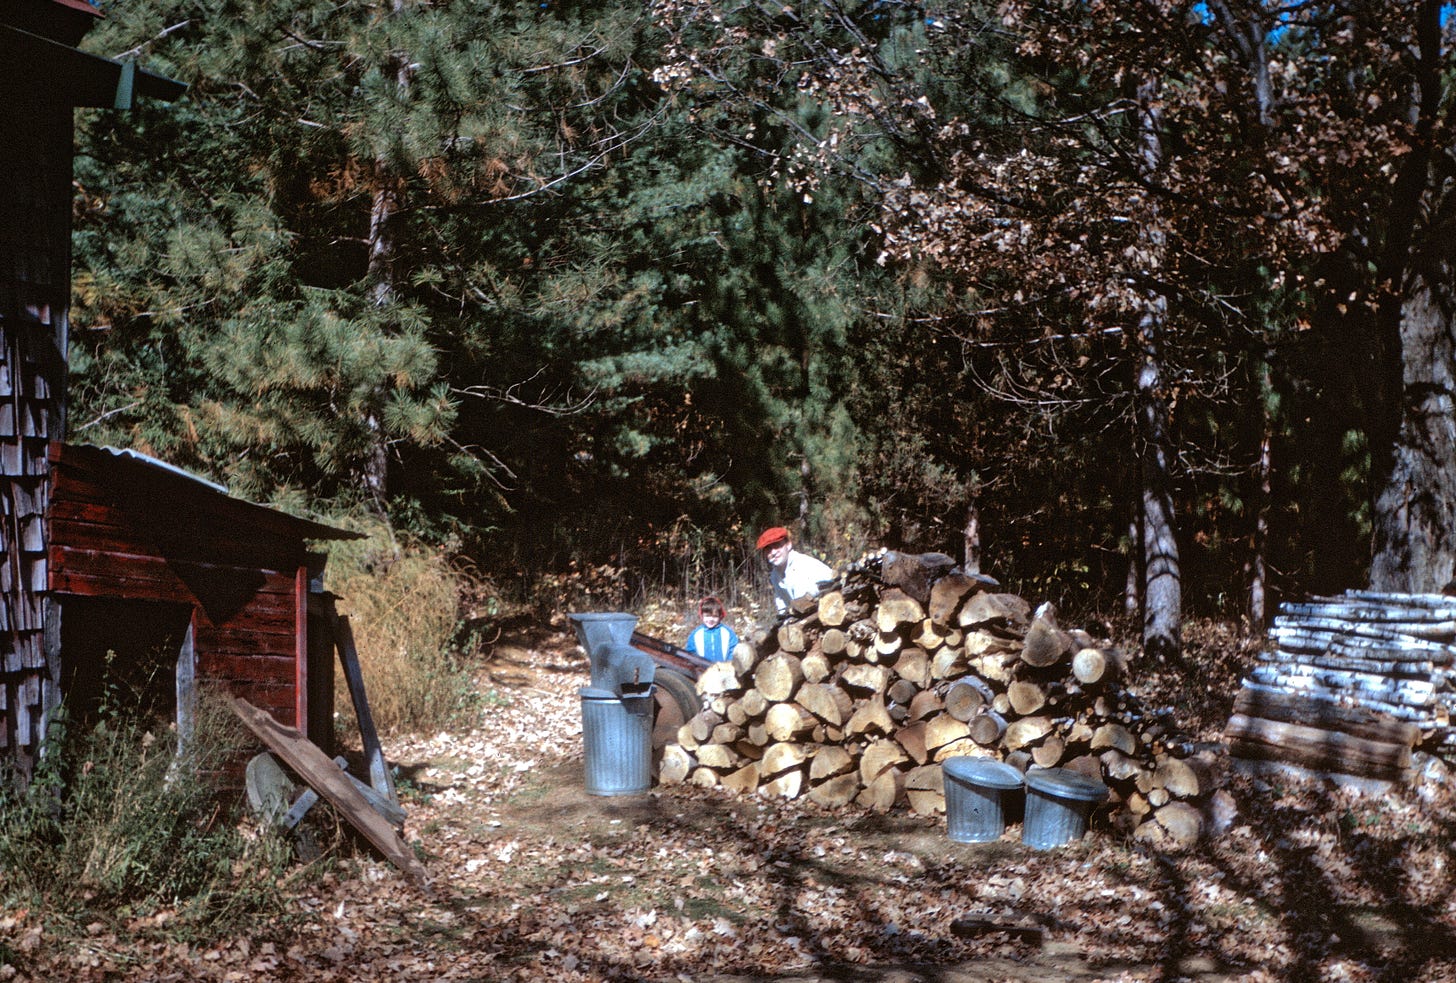 Man and girl behind a woodpile